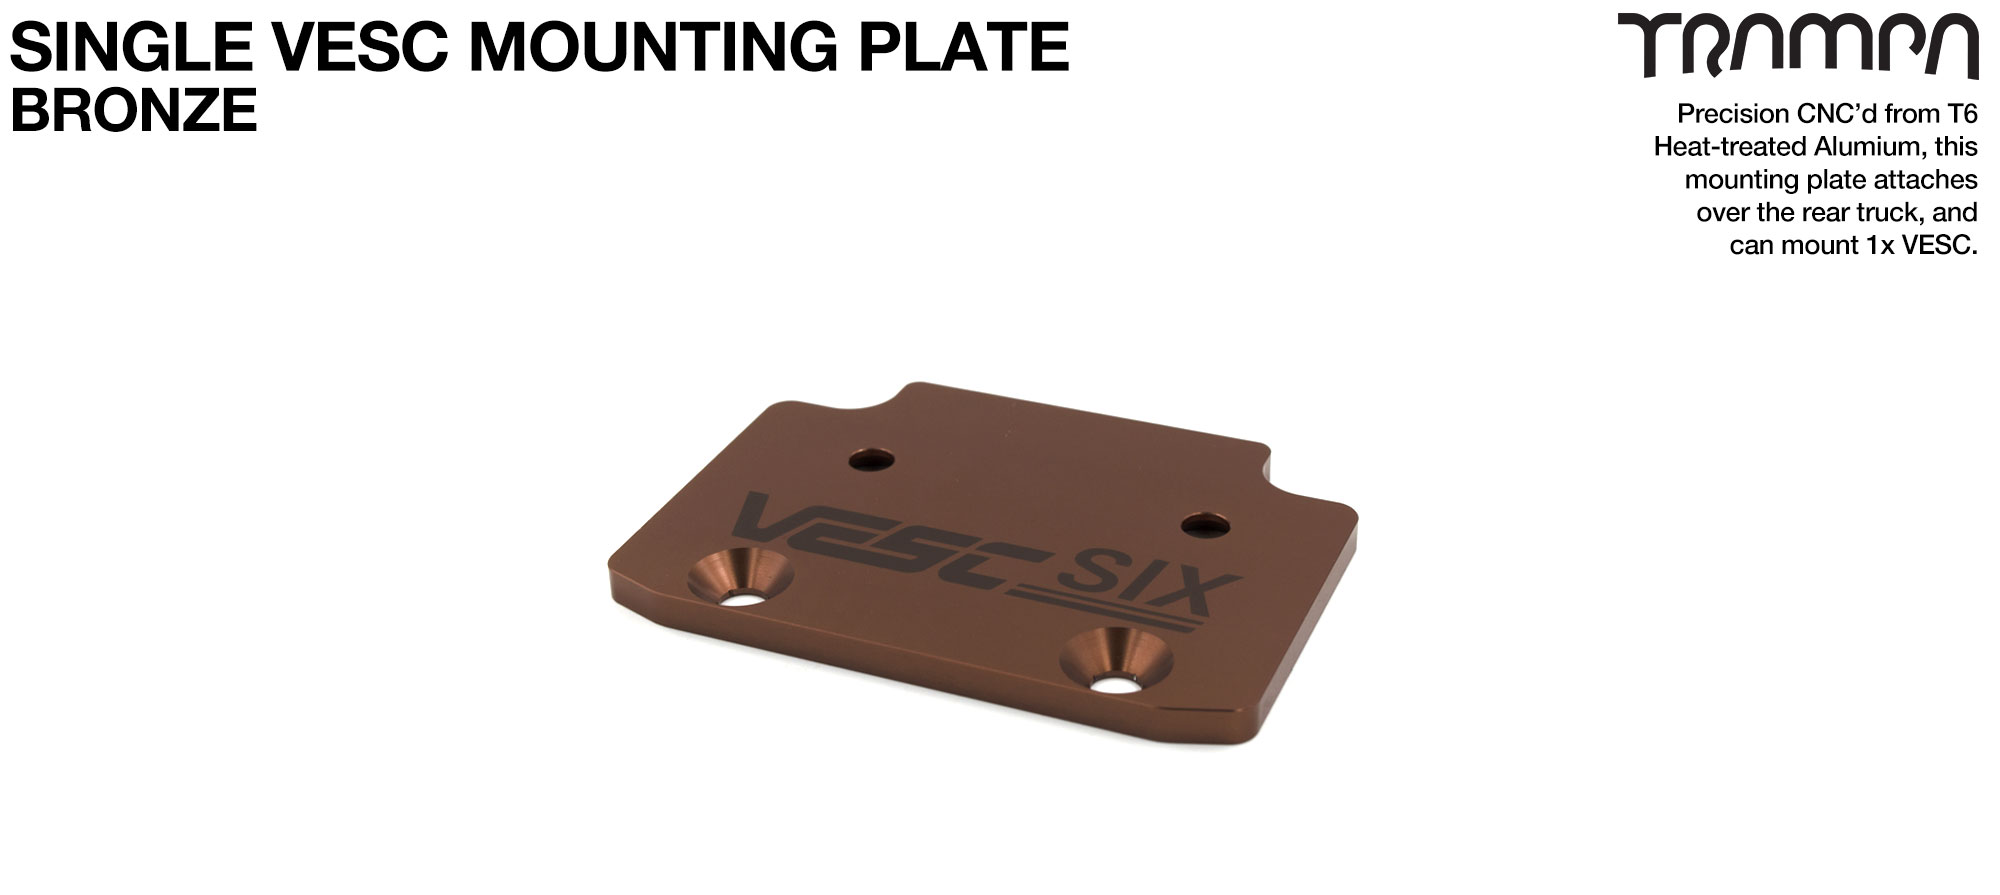 ALUMINIUM Mounting Plate for 1x VESC 6 & Fixing Bolts - BRONZE 